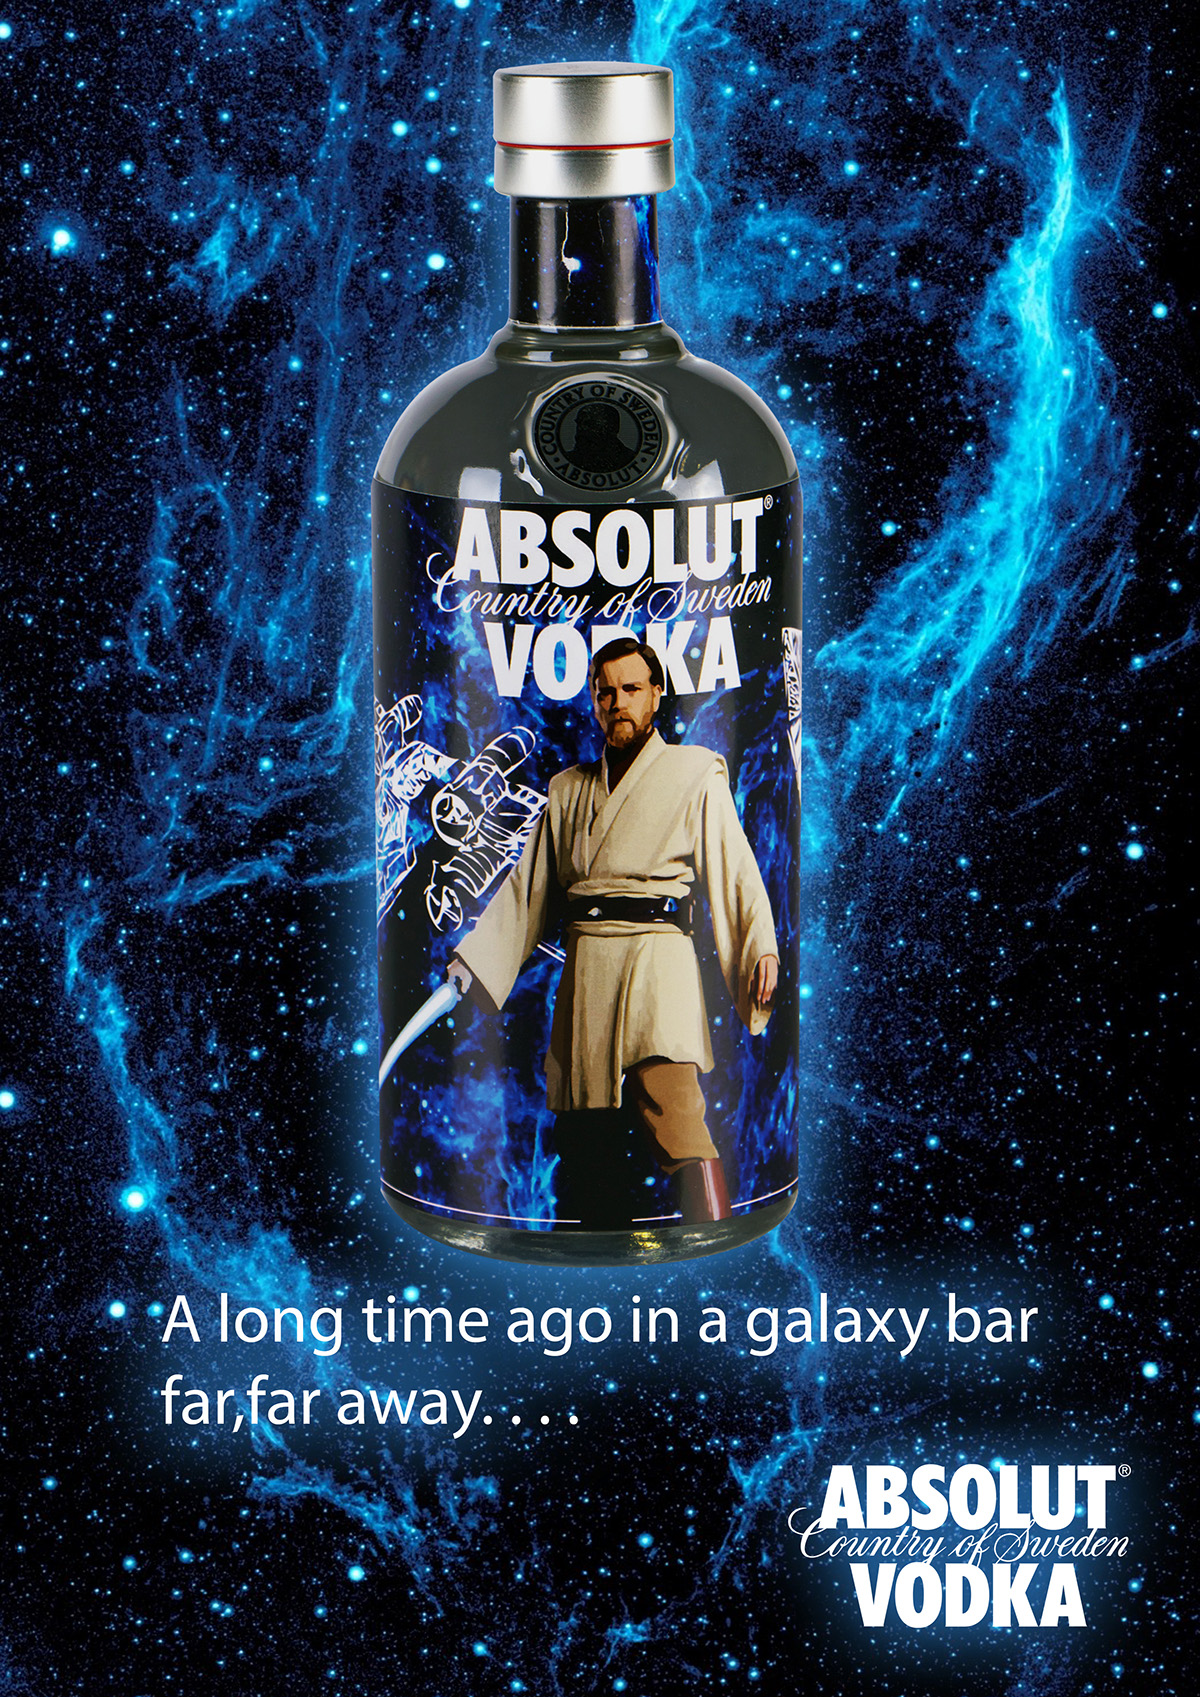 star wars Han Solo obi van kenobi yoda luke skywalker absolut Vodka bottle Label design Promotional poster creative harison ford